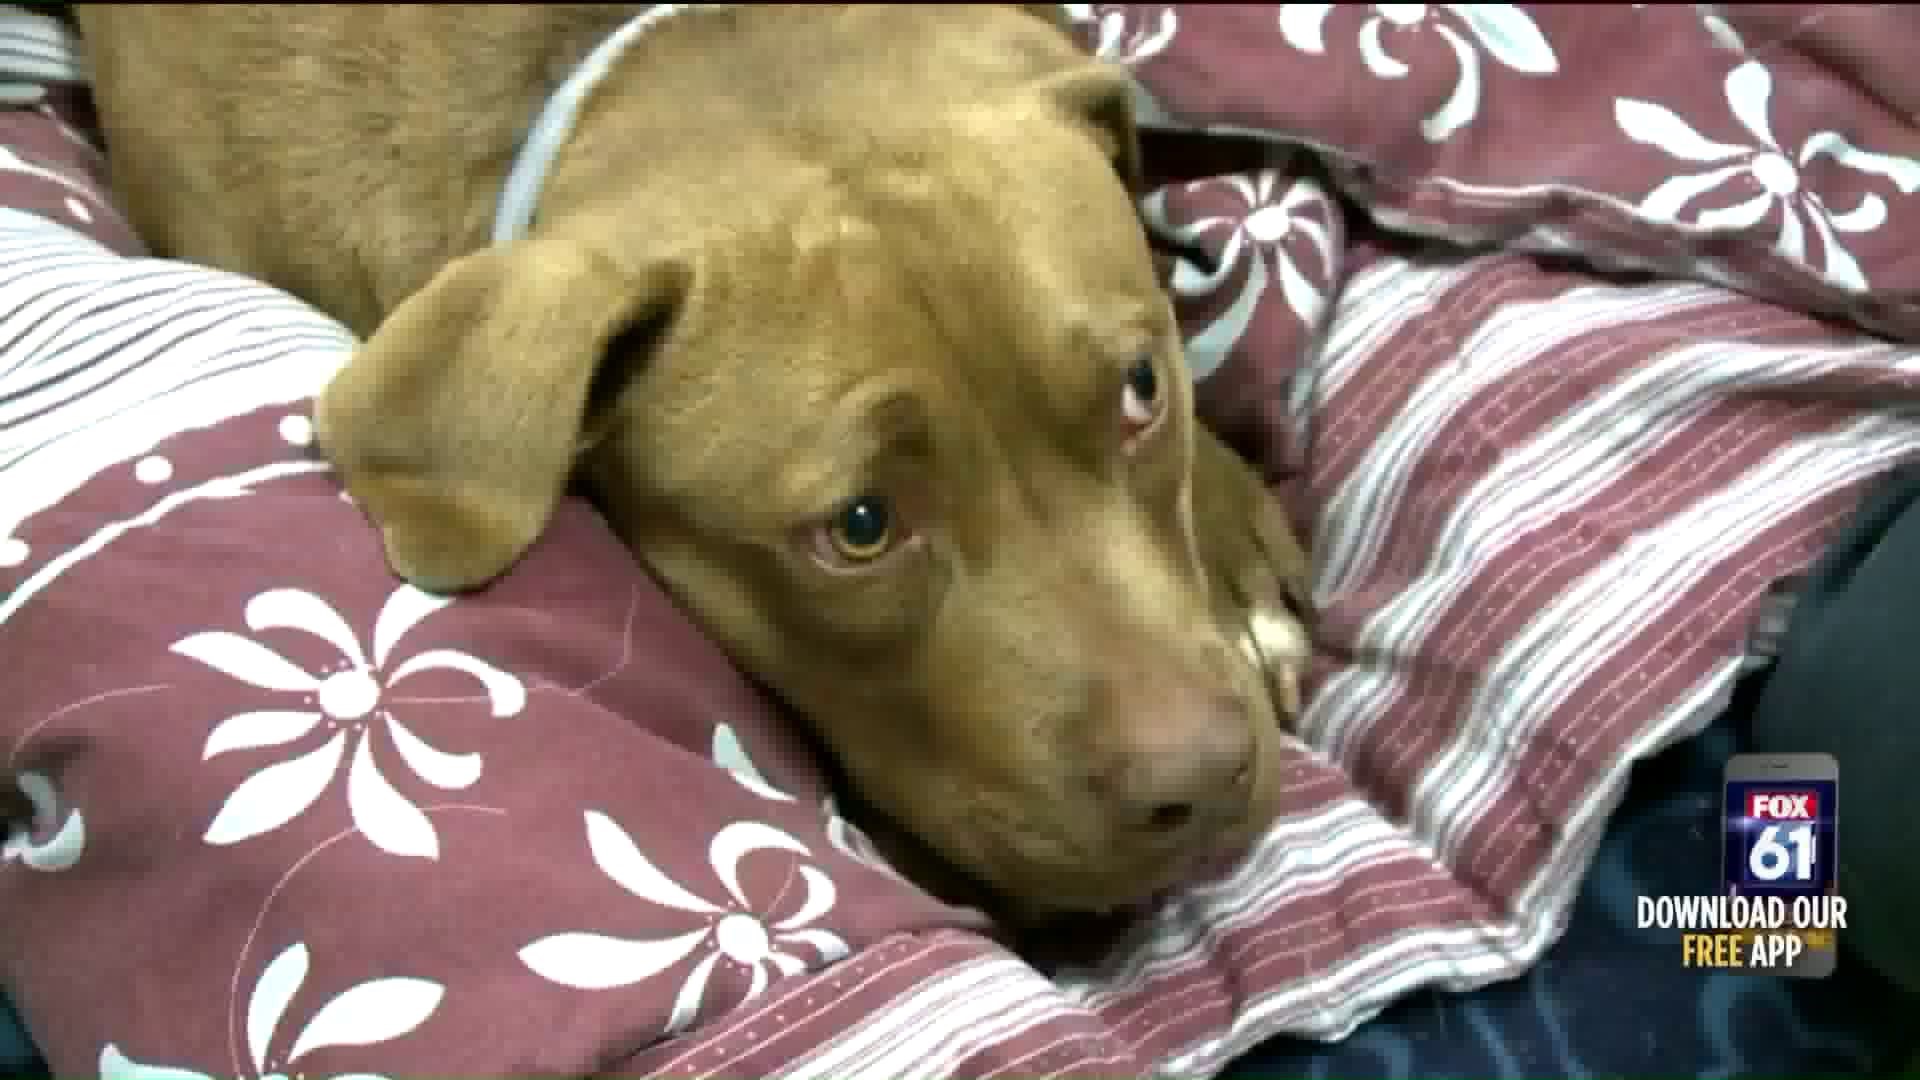 Missing dog reunites with owner